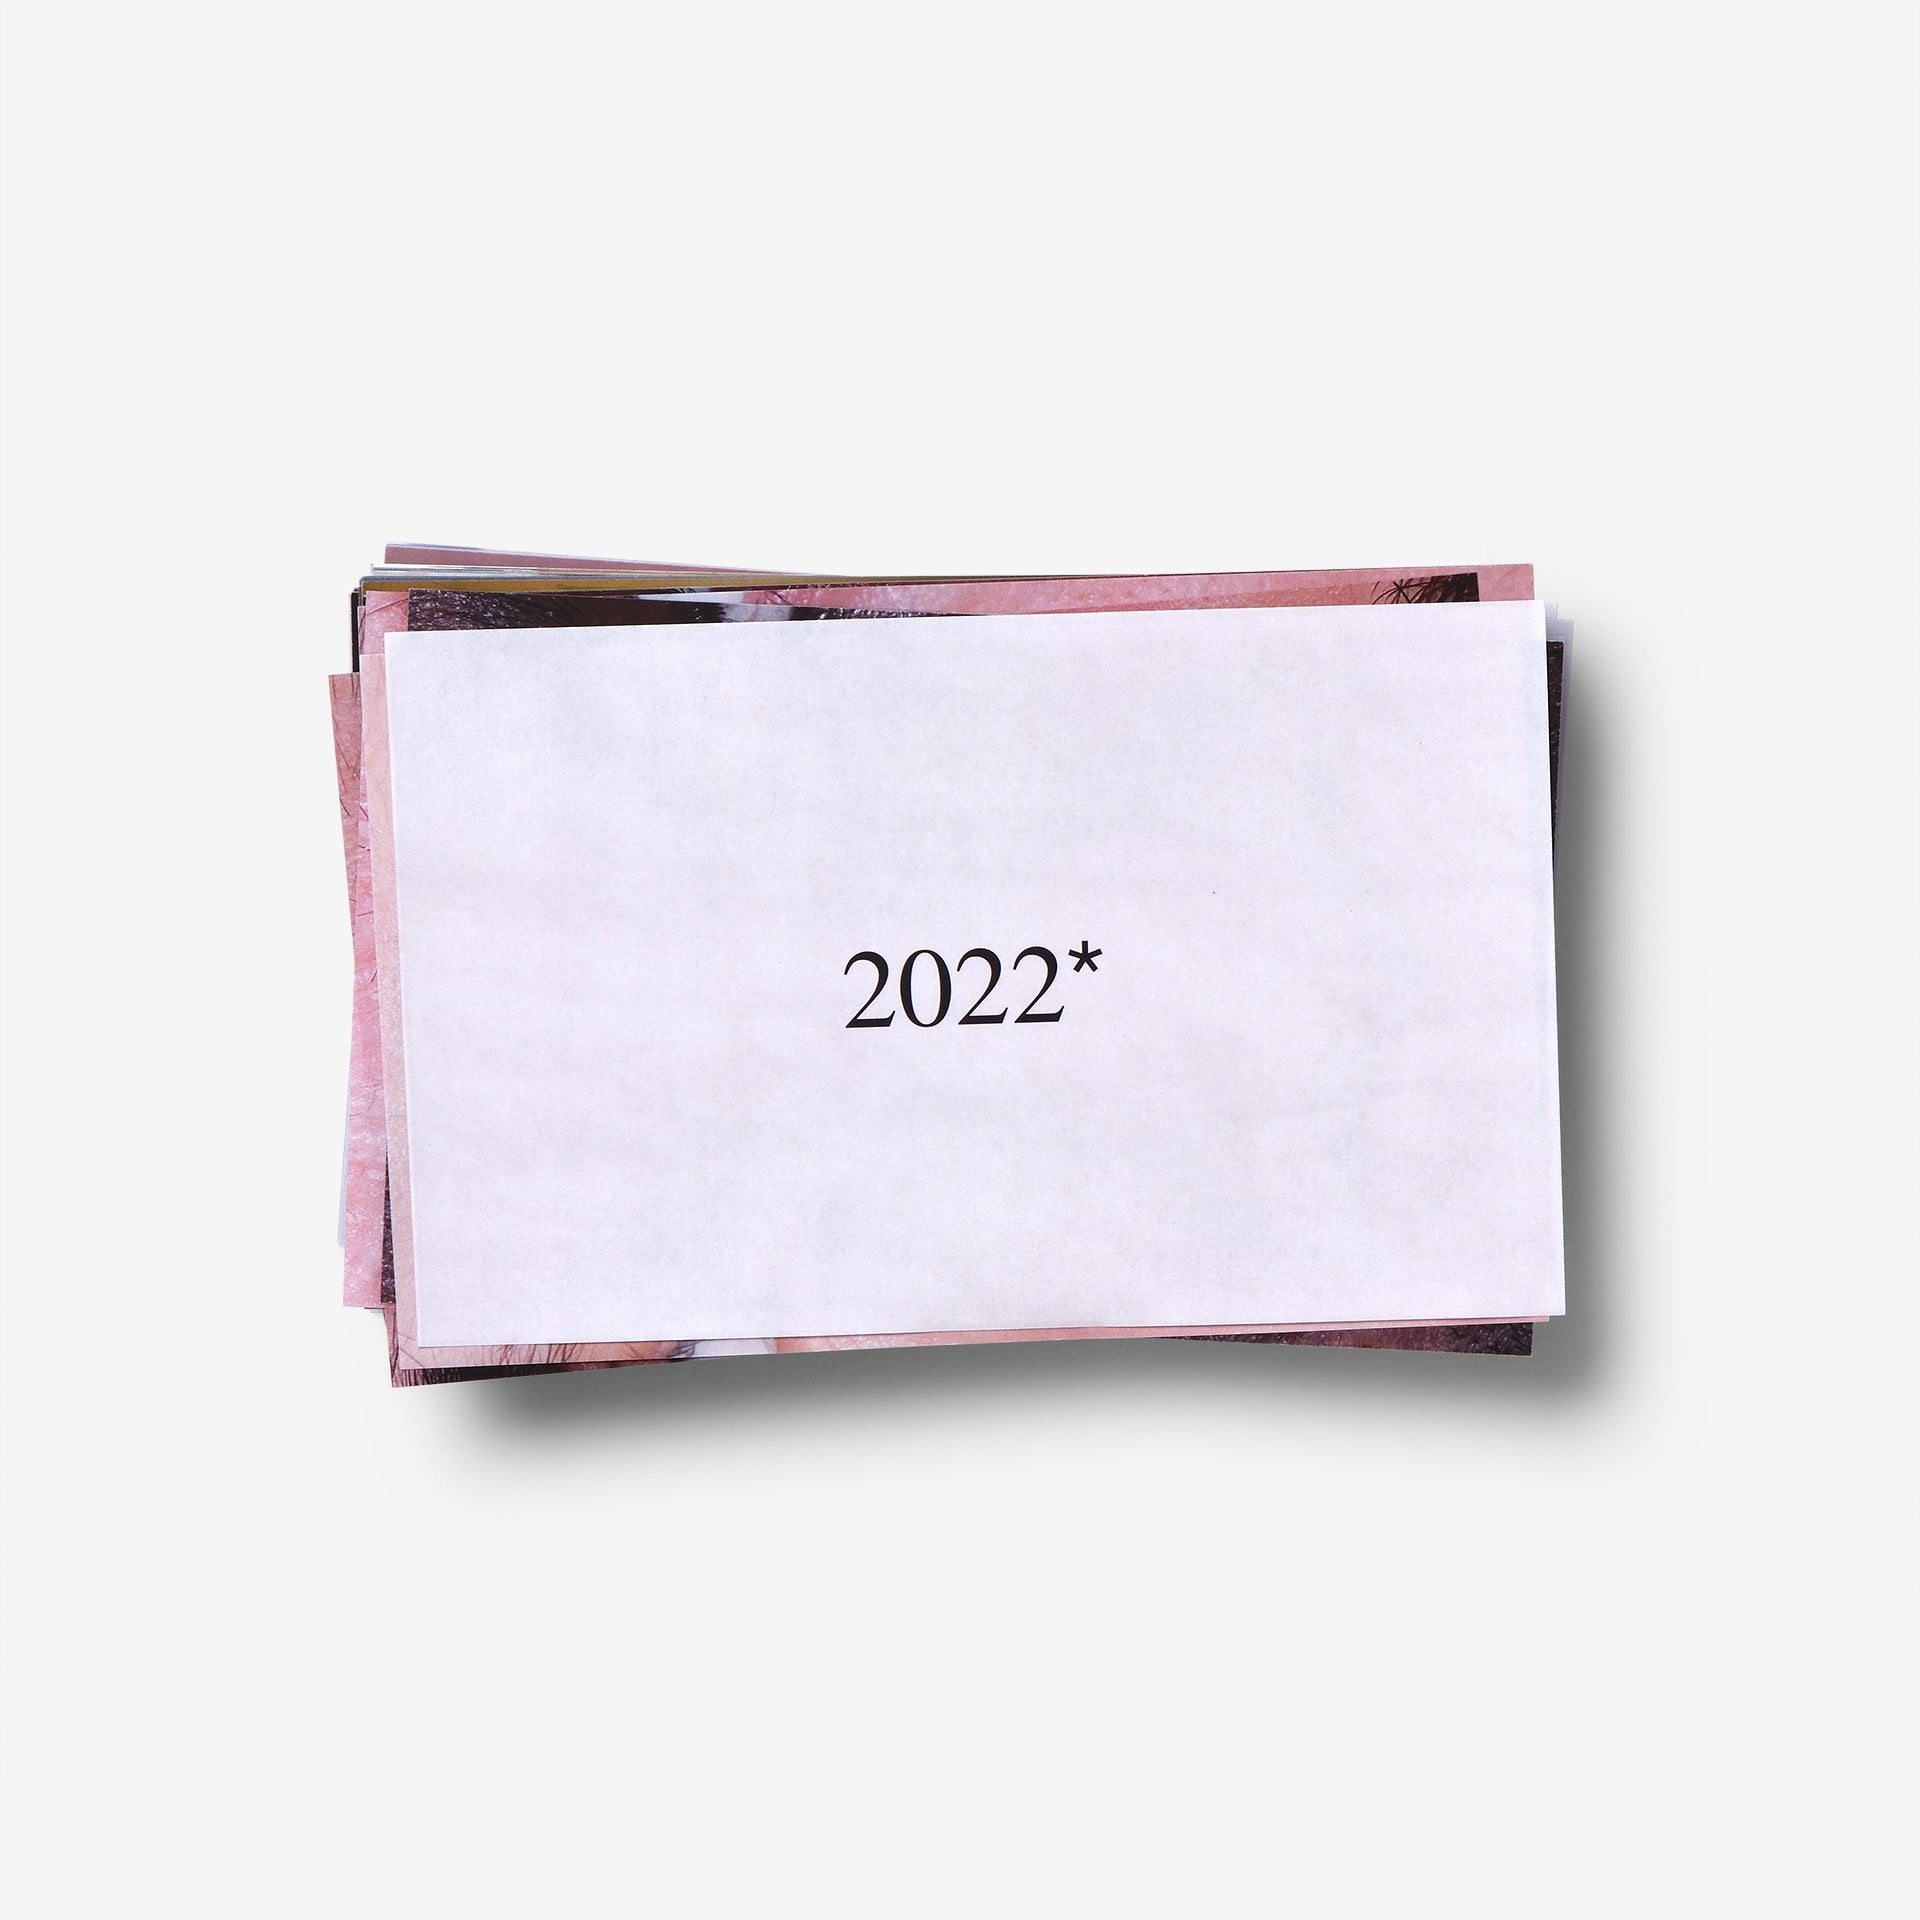 2022* Magazine - Sara Bastai Cover